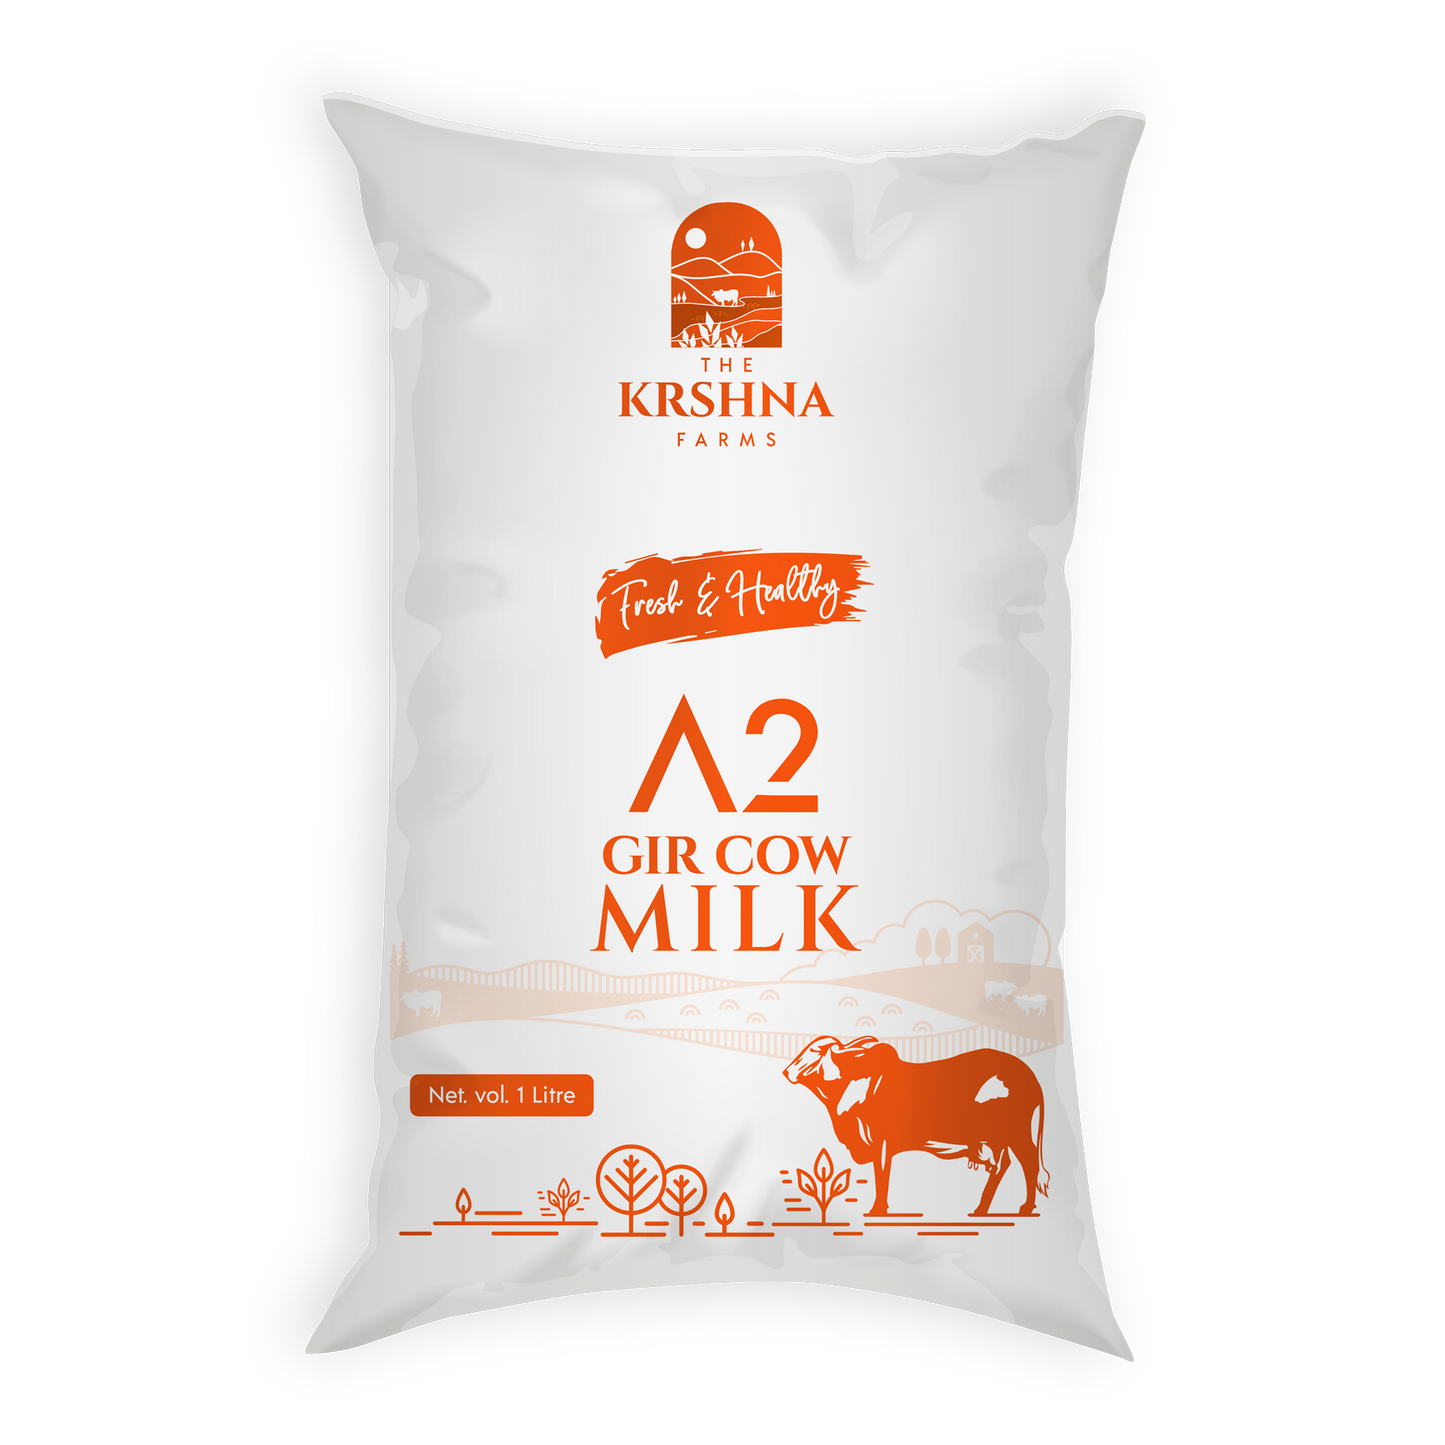 The Krshna Farms A2 milk mumbai